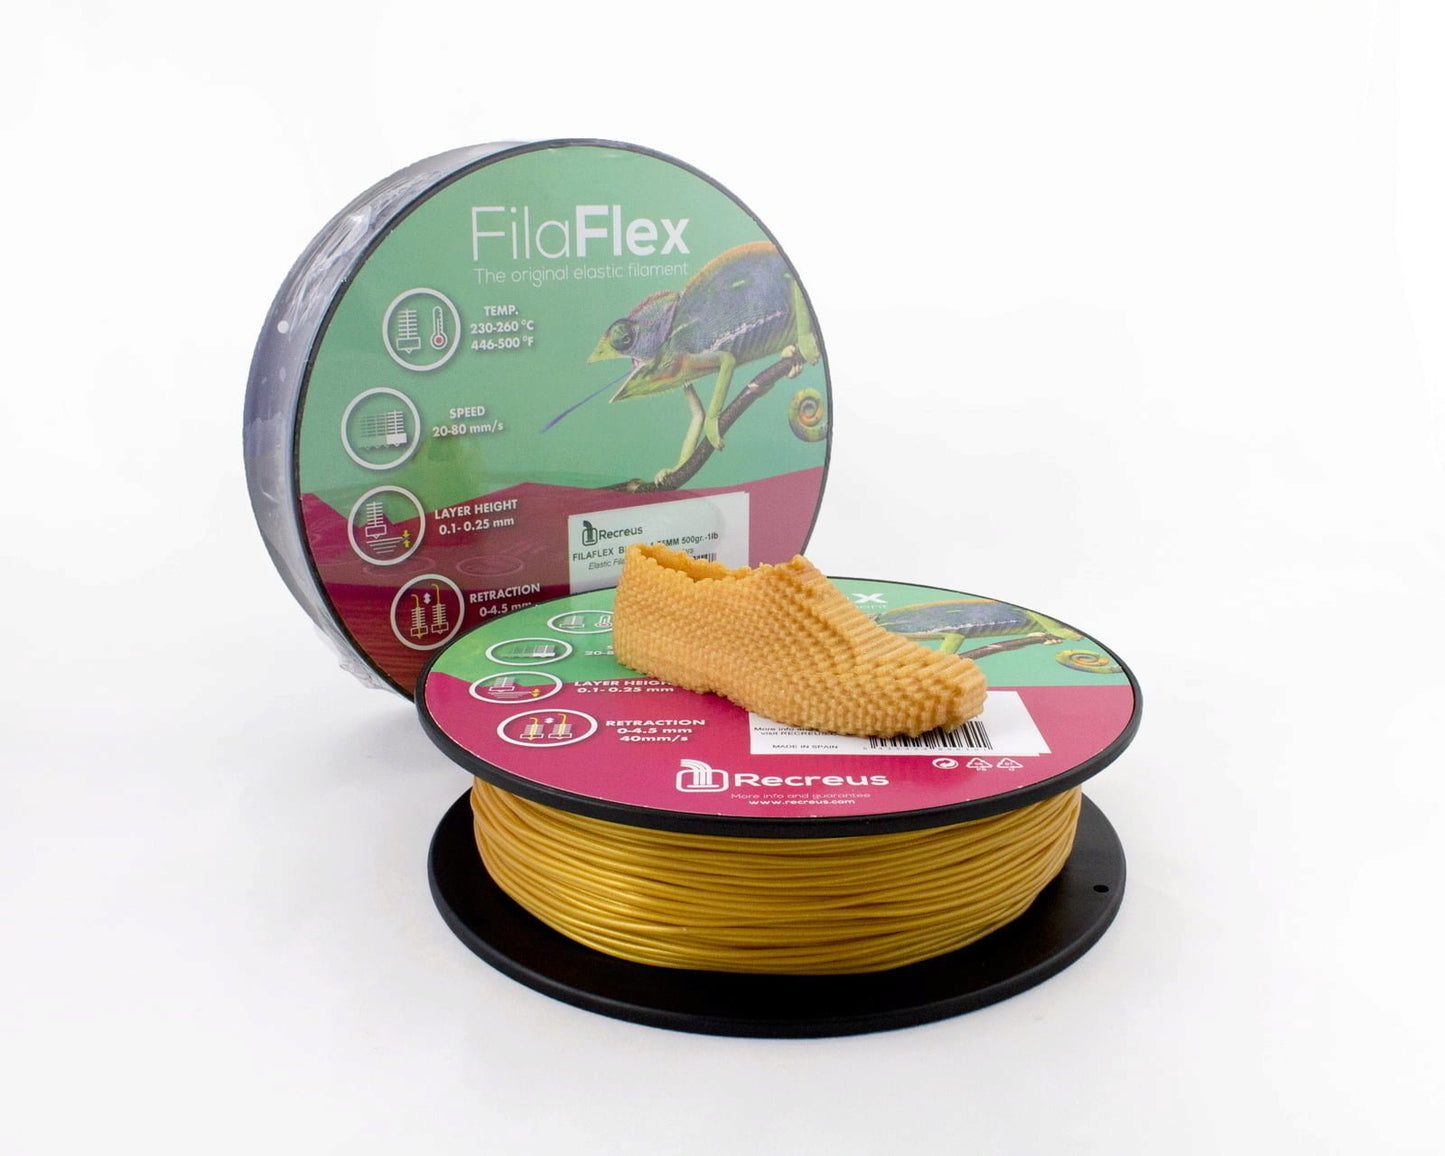 Filaflex